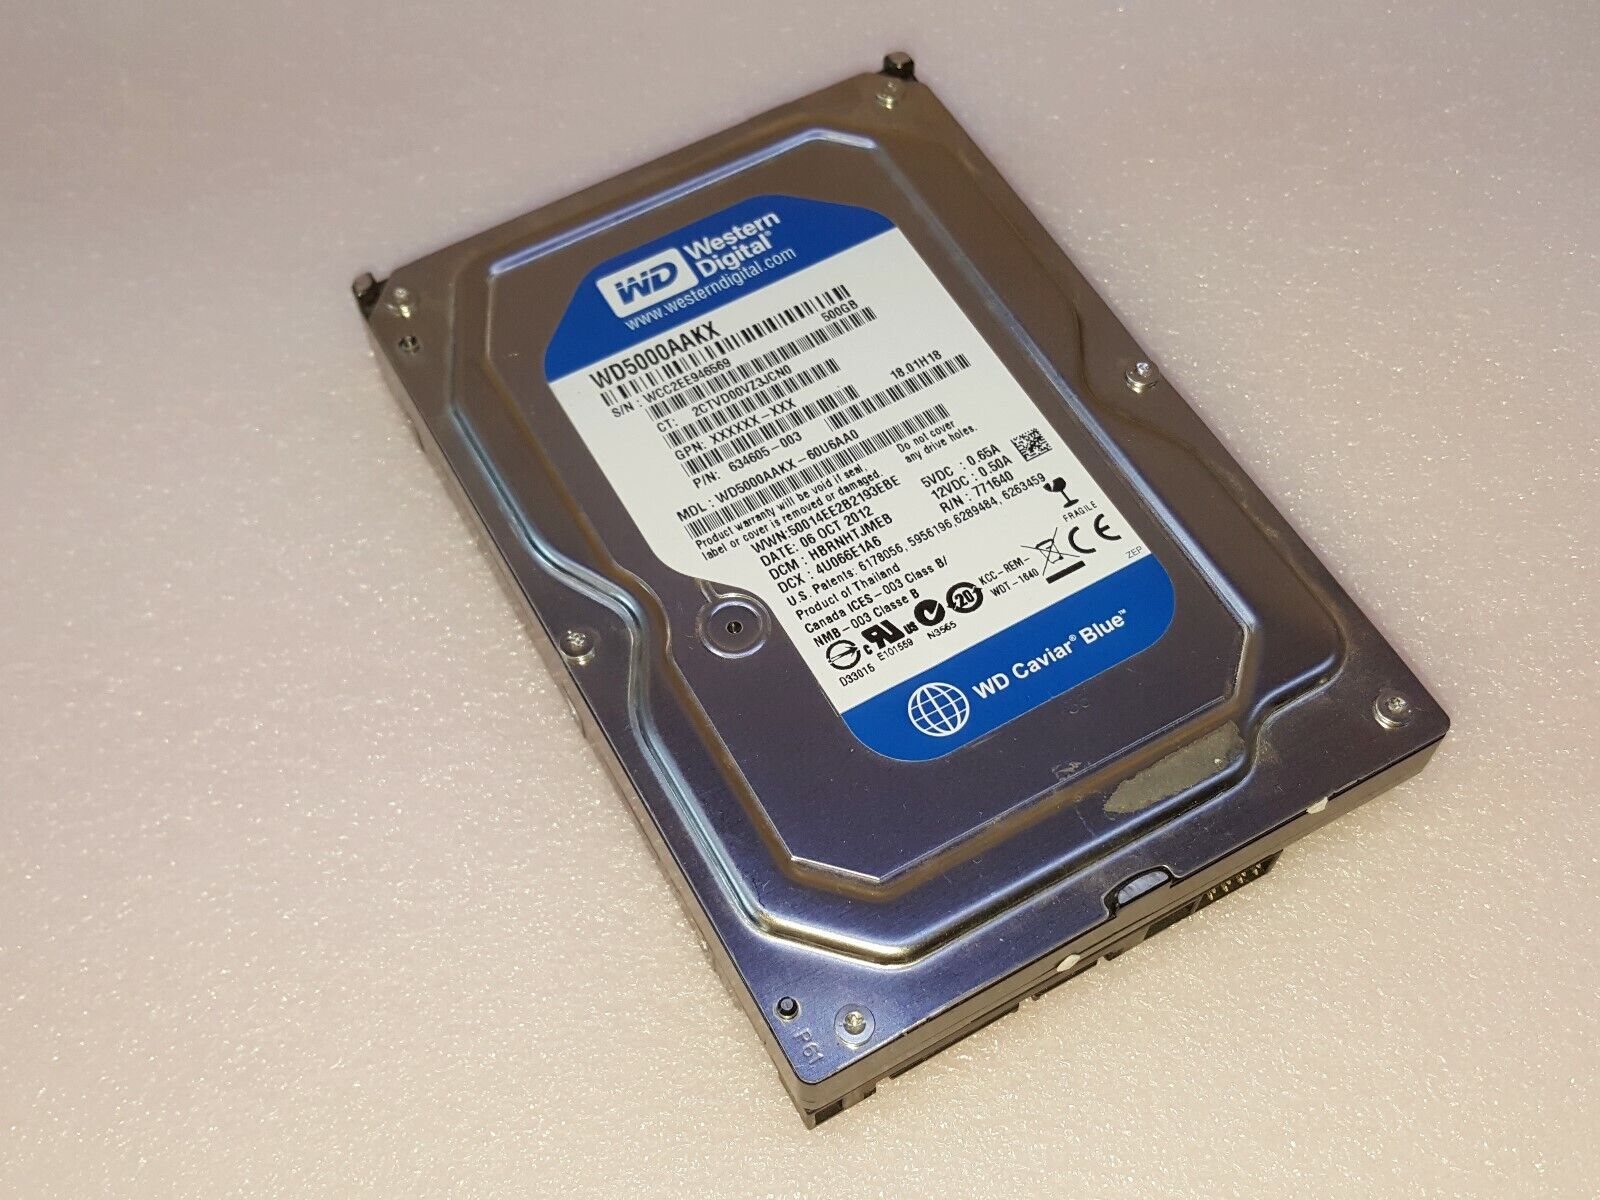 Dell Studio 540 - 500GB SATA Hard Drive with Windows 10 Home 64-Bit Loaded